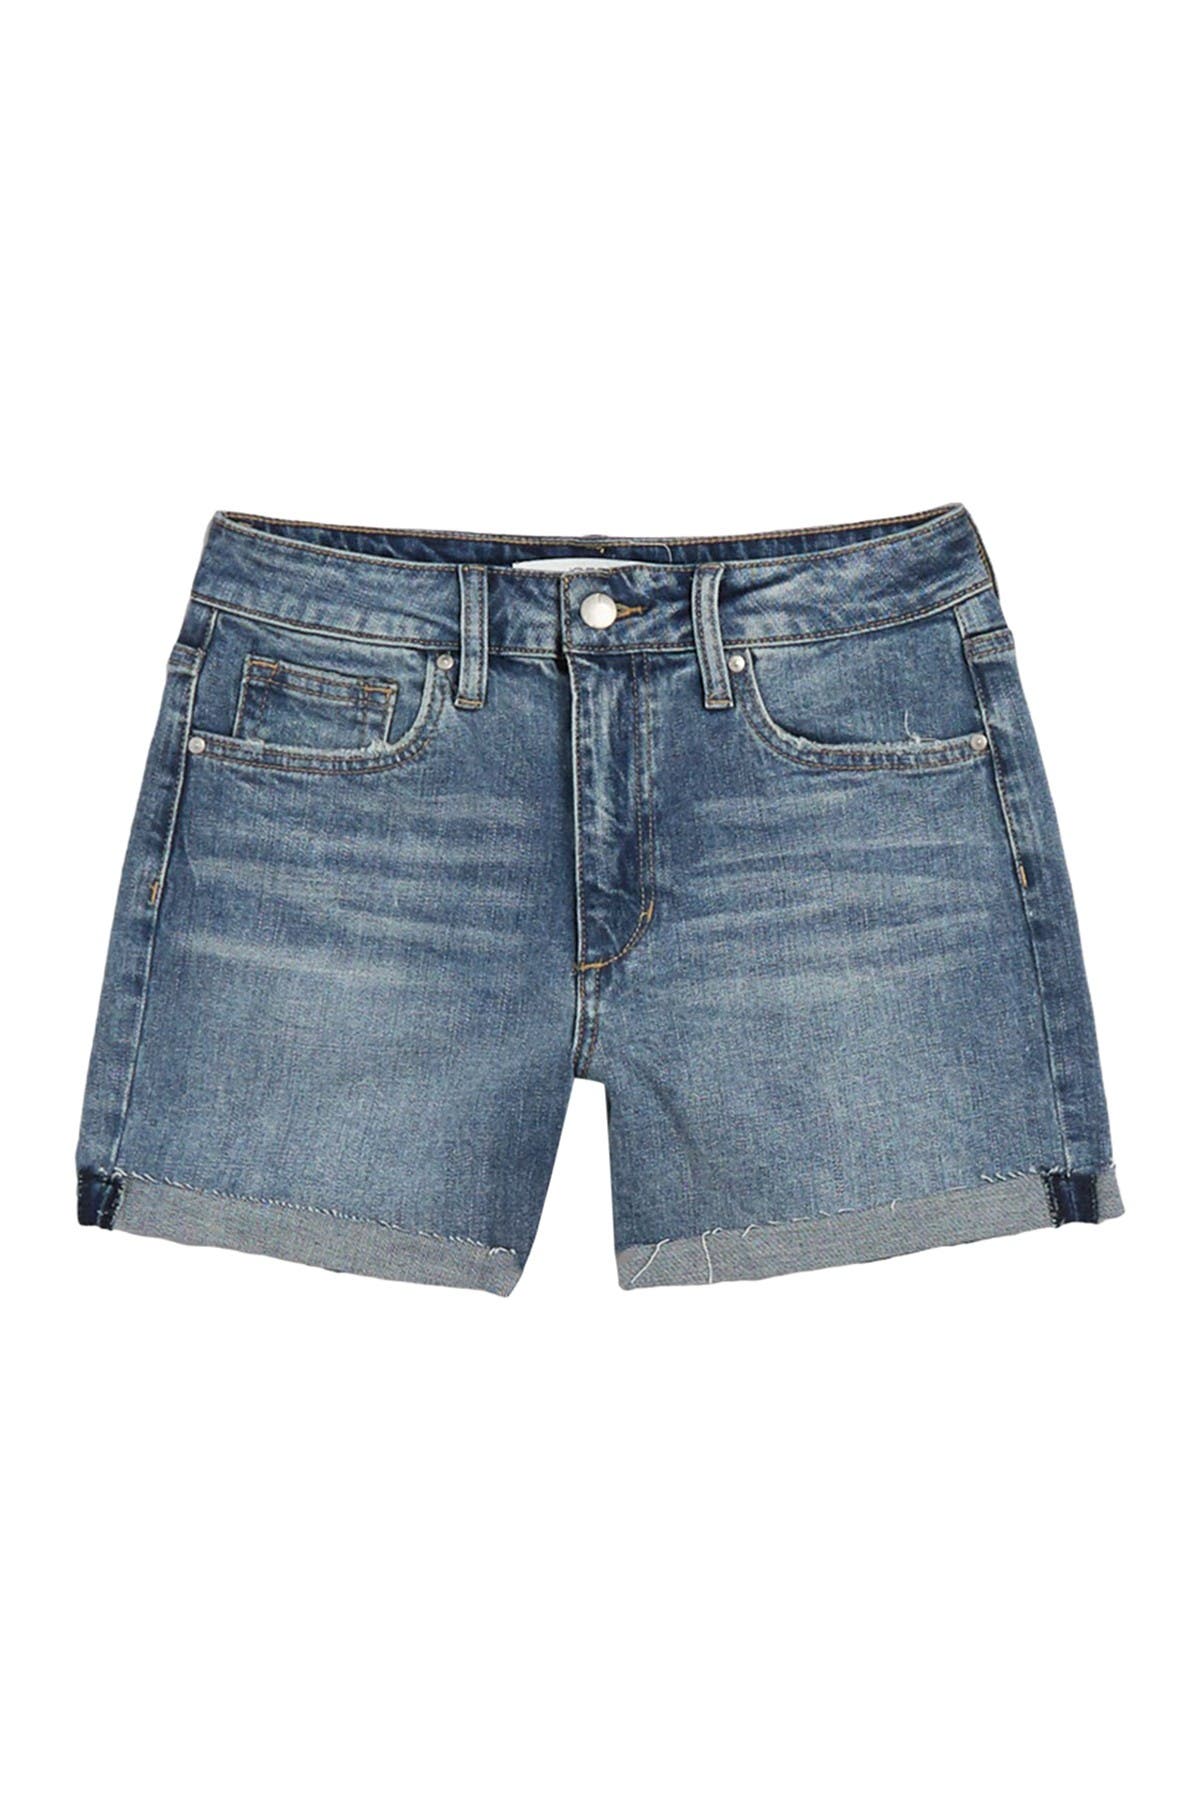 nordstrom rack jean shorts